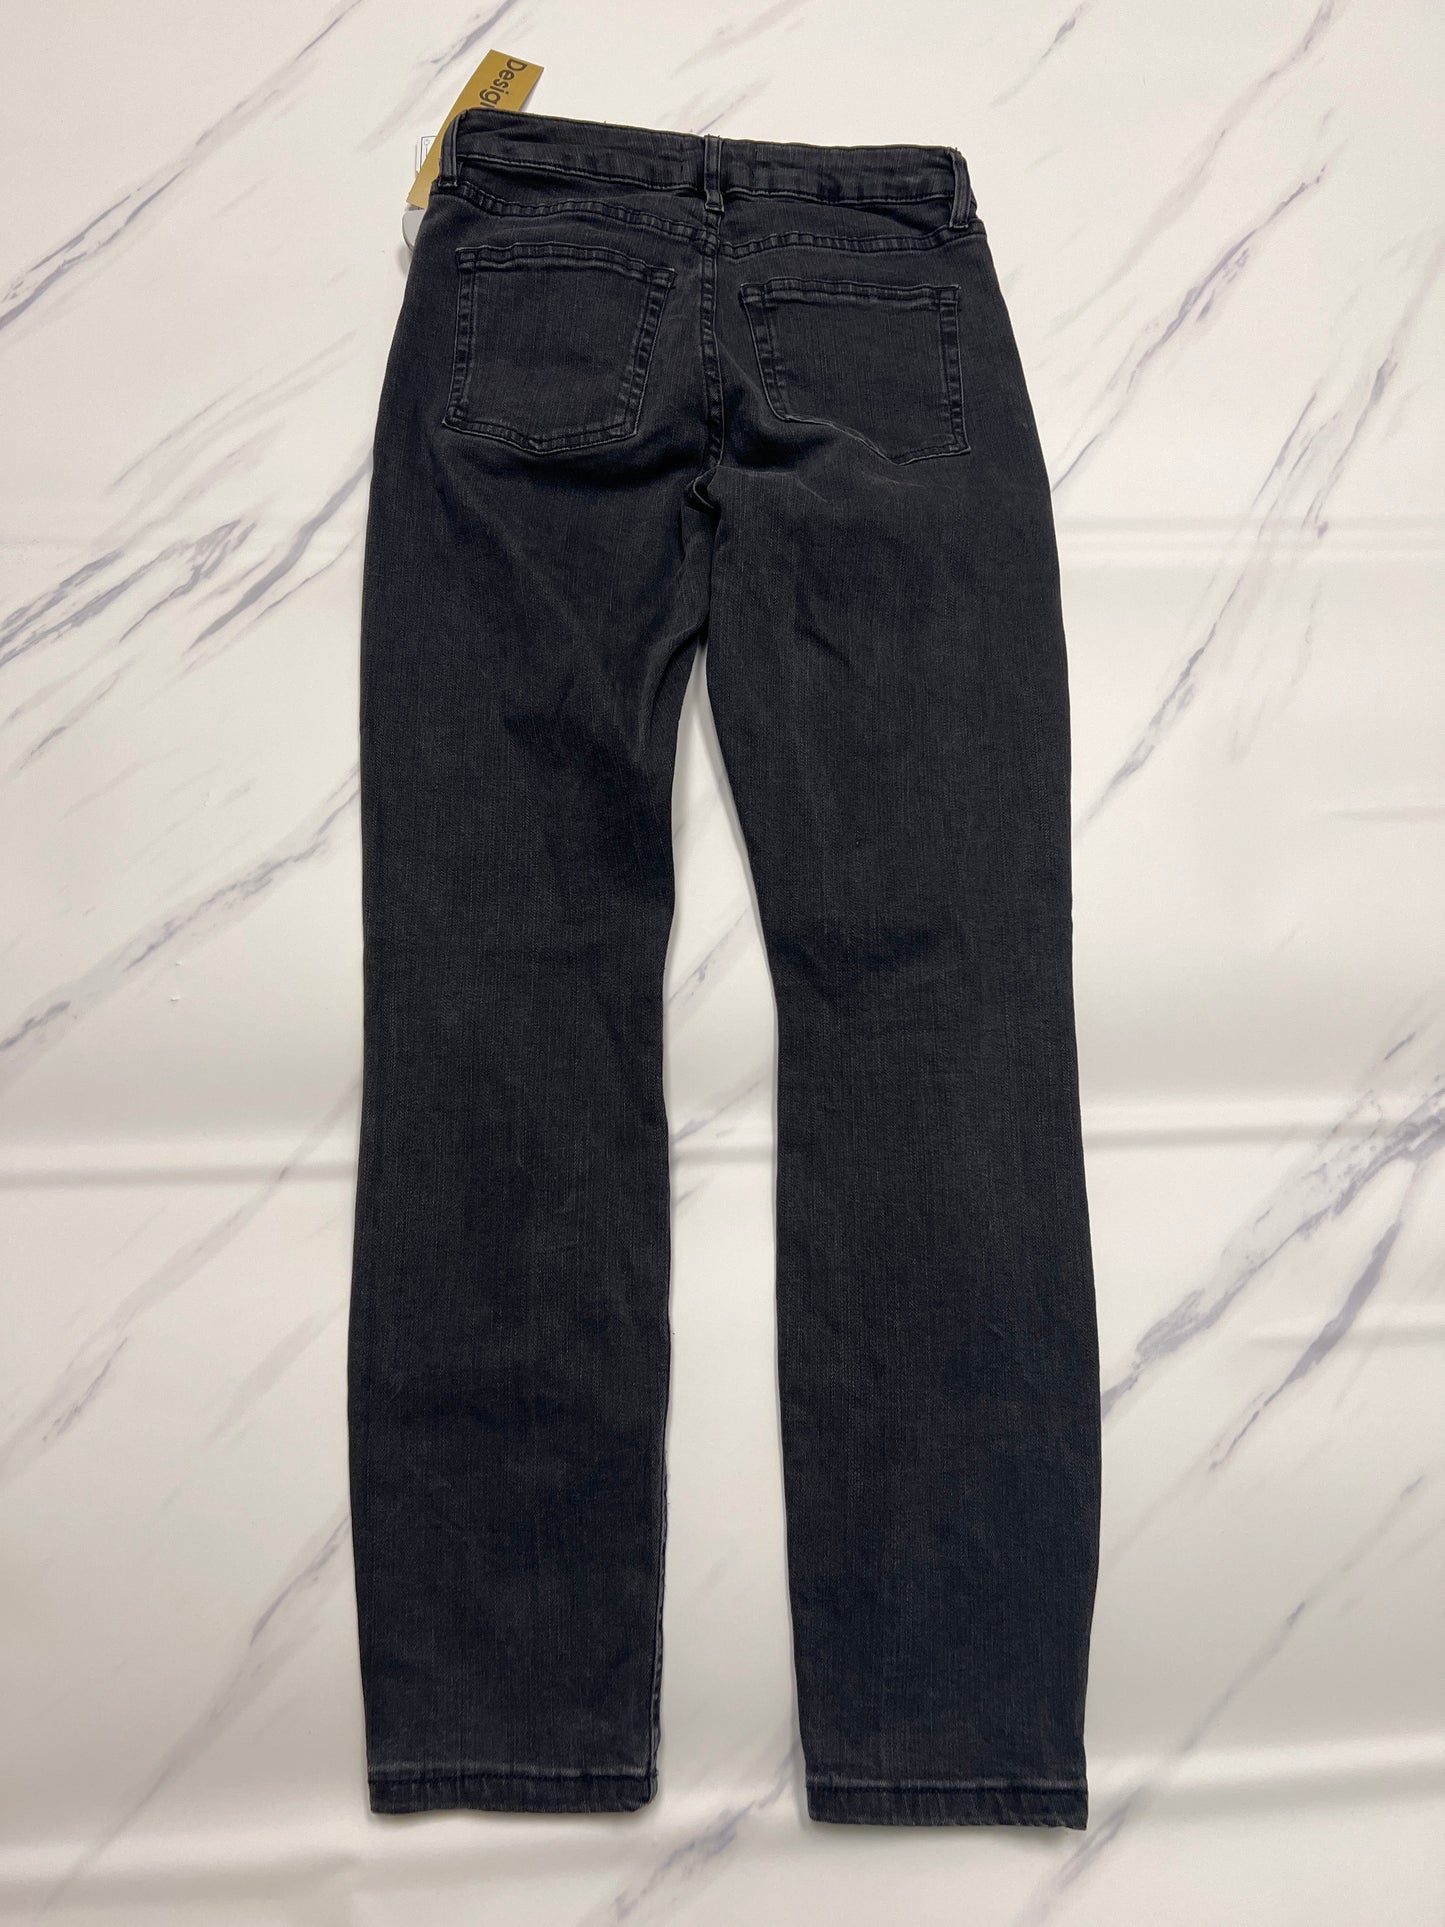 Jeans Designer By Cma  Size: 0